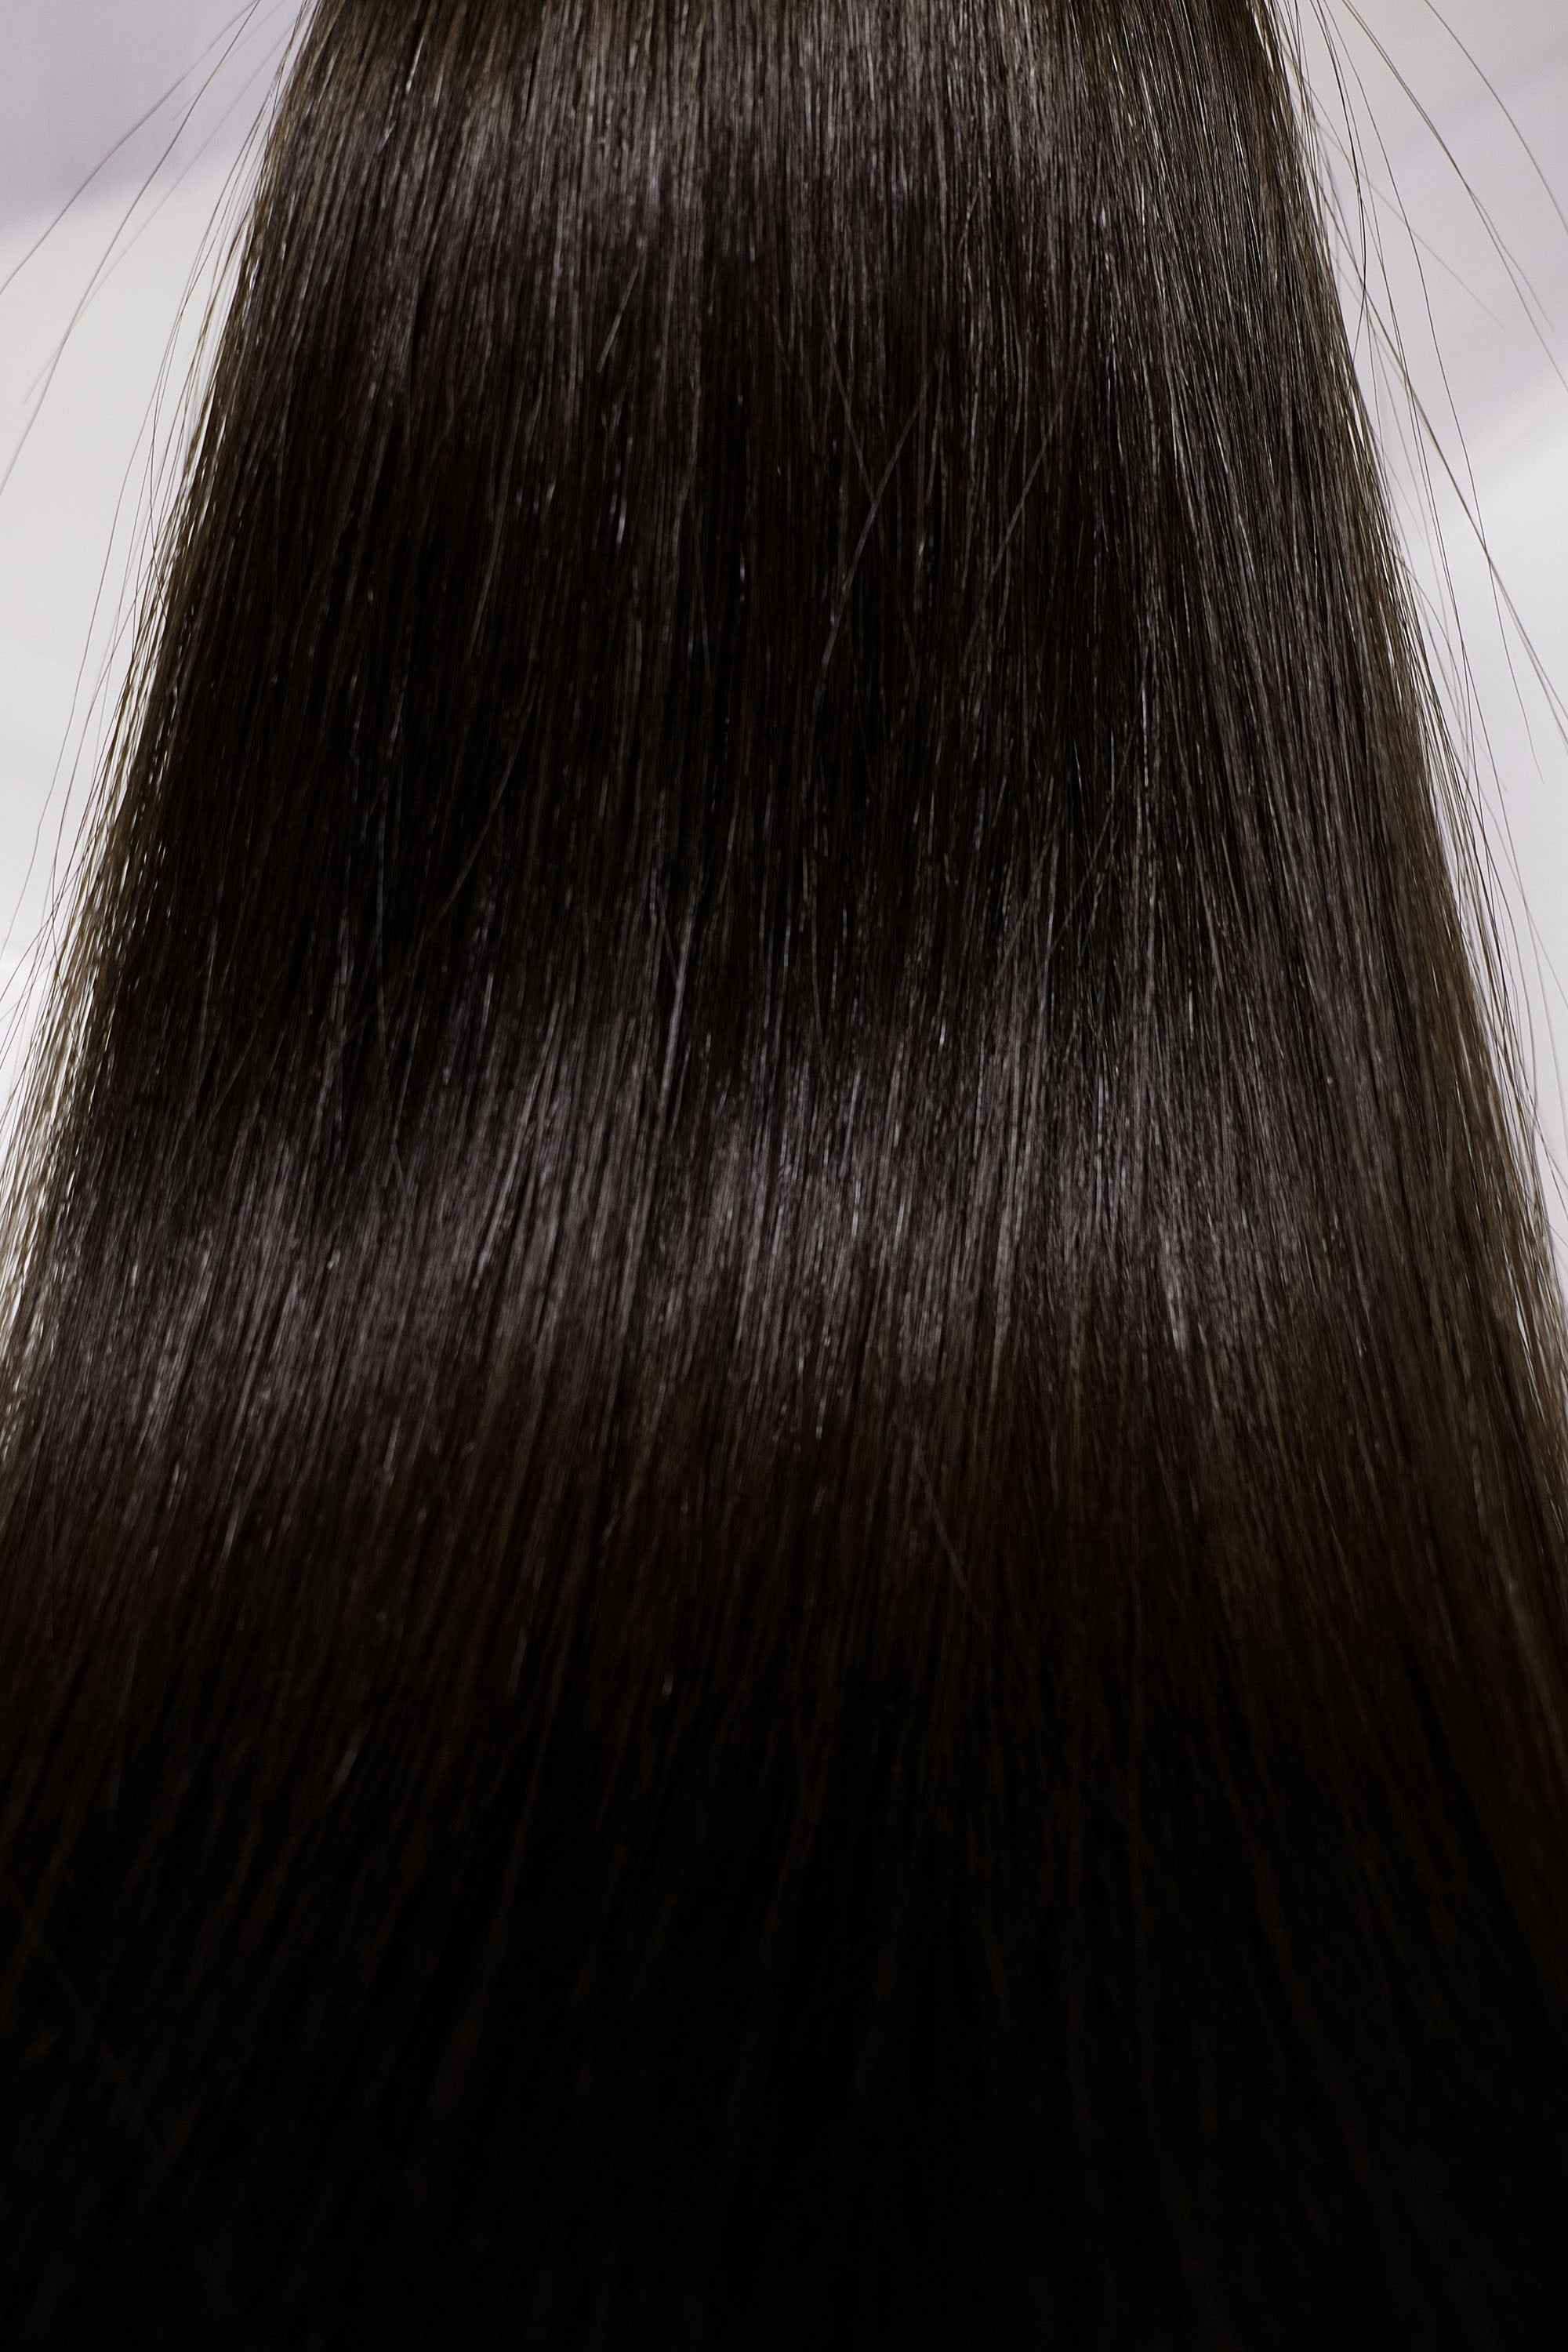 Behair professional Keratin Tip "Premium" 28" (70cm) Natural Straight Natural Black #1B - 25g (Micro - 0.5g each pcs) hair extensions